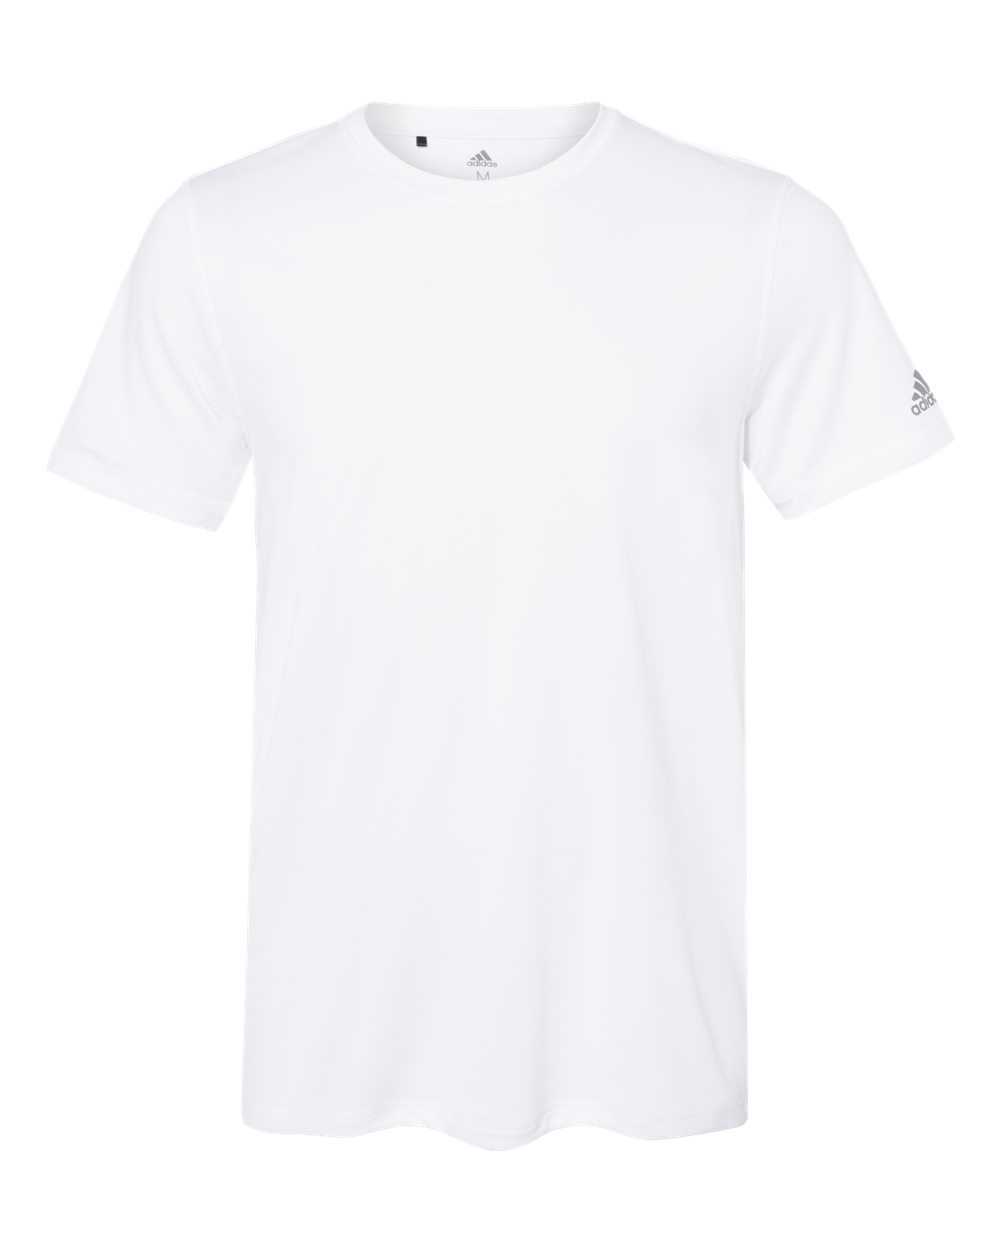 Adidas A376 Sport T-Shirt - White - HIT a Double